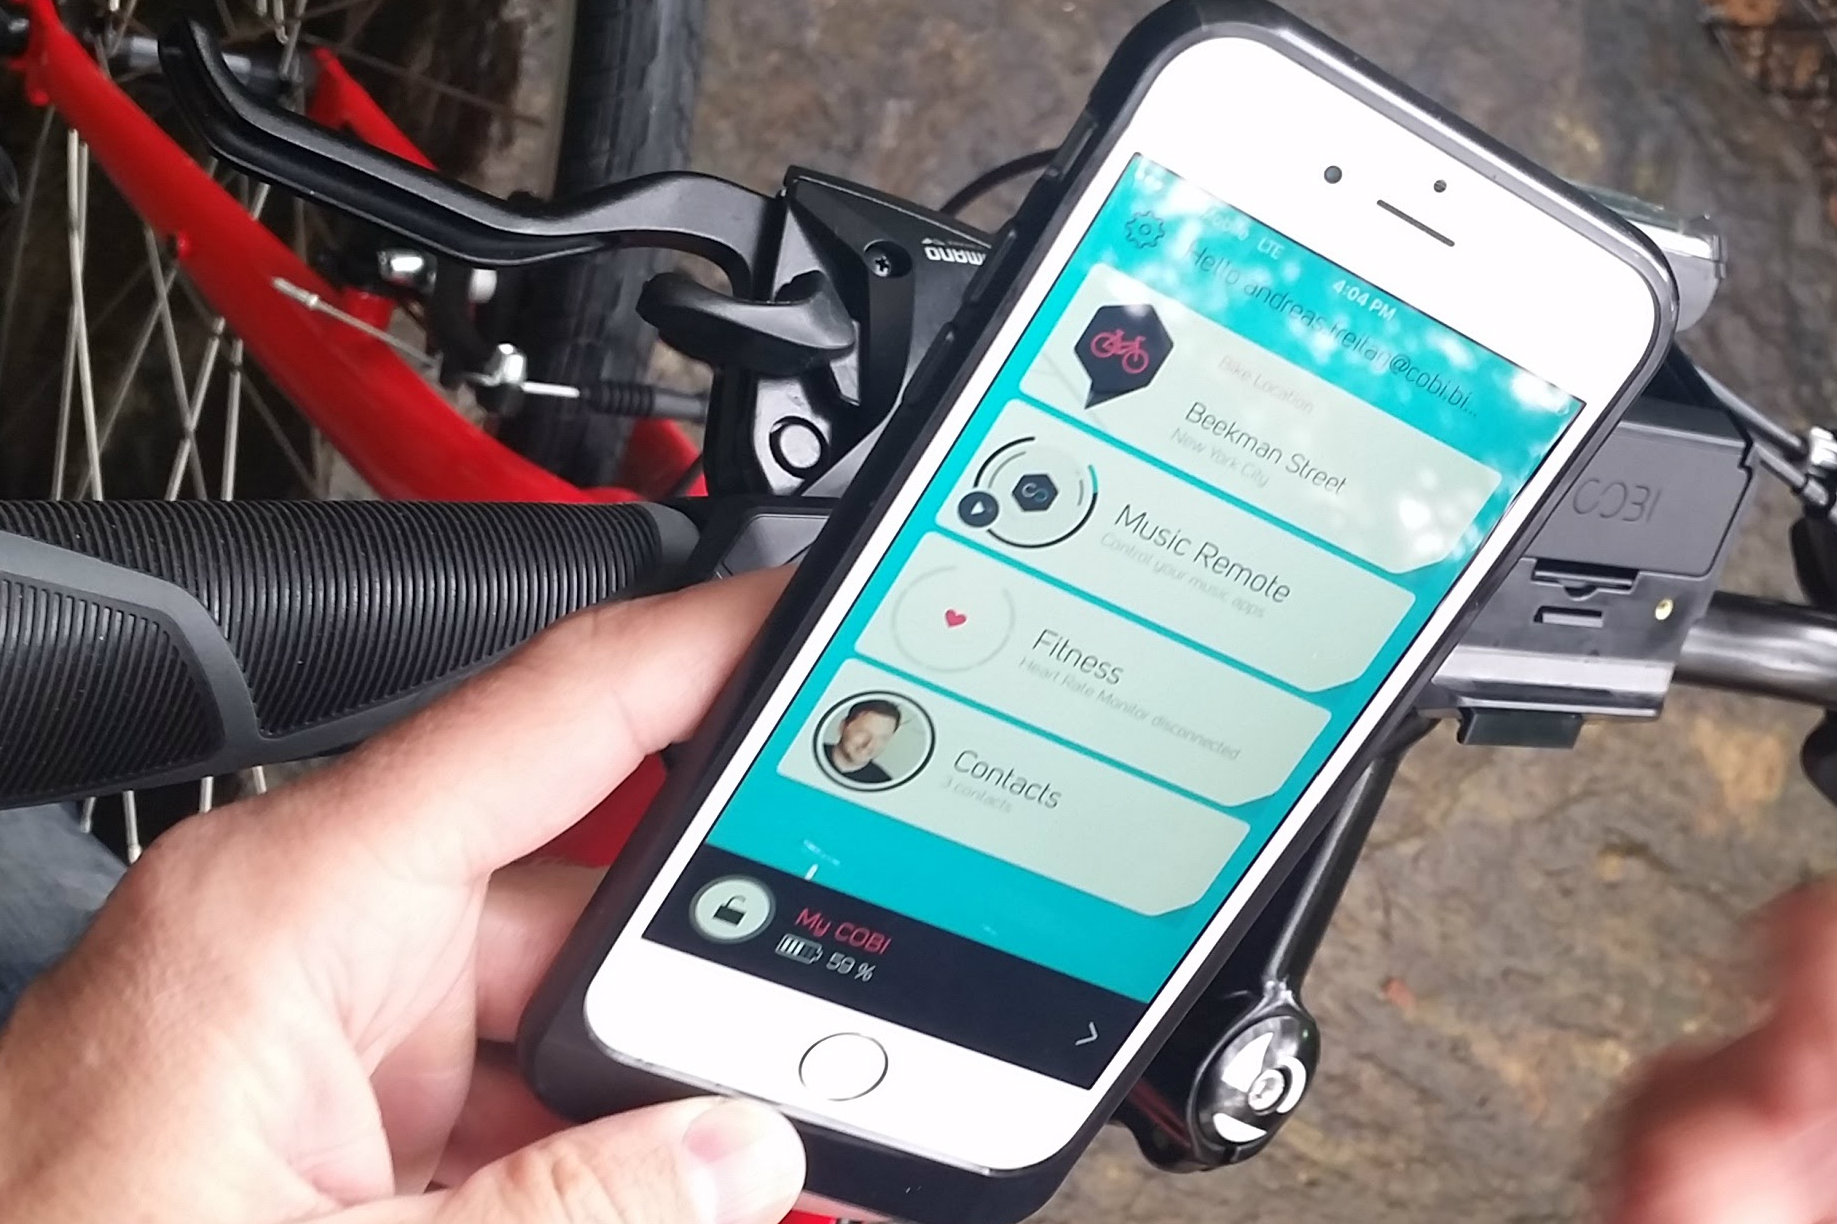 cobi connected biking bike routes navigation options